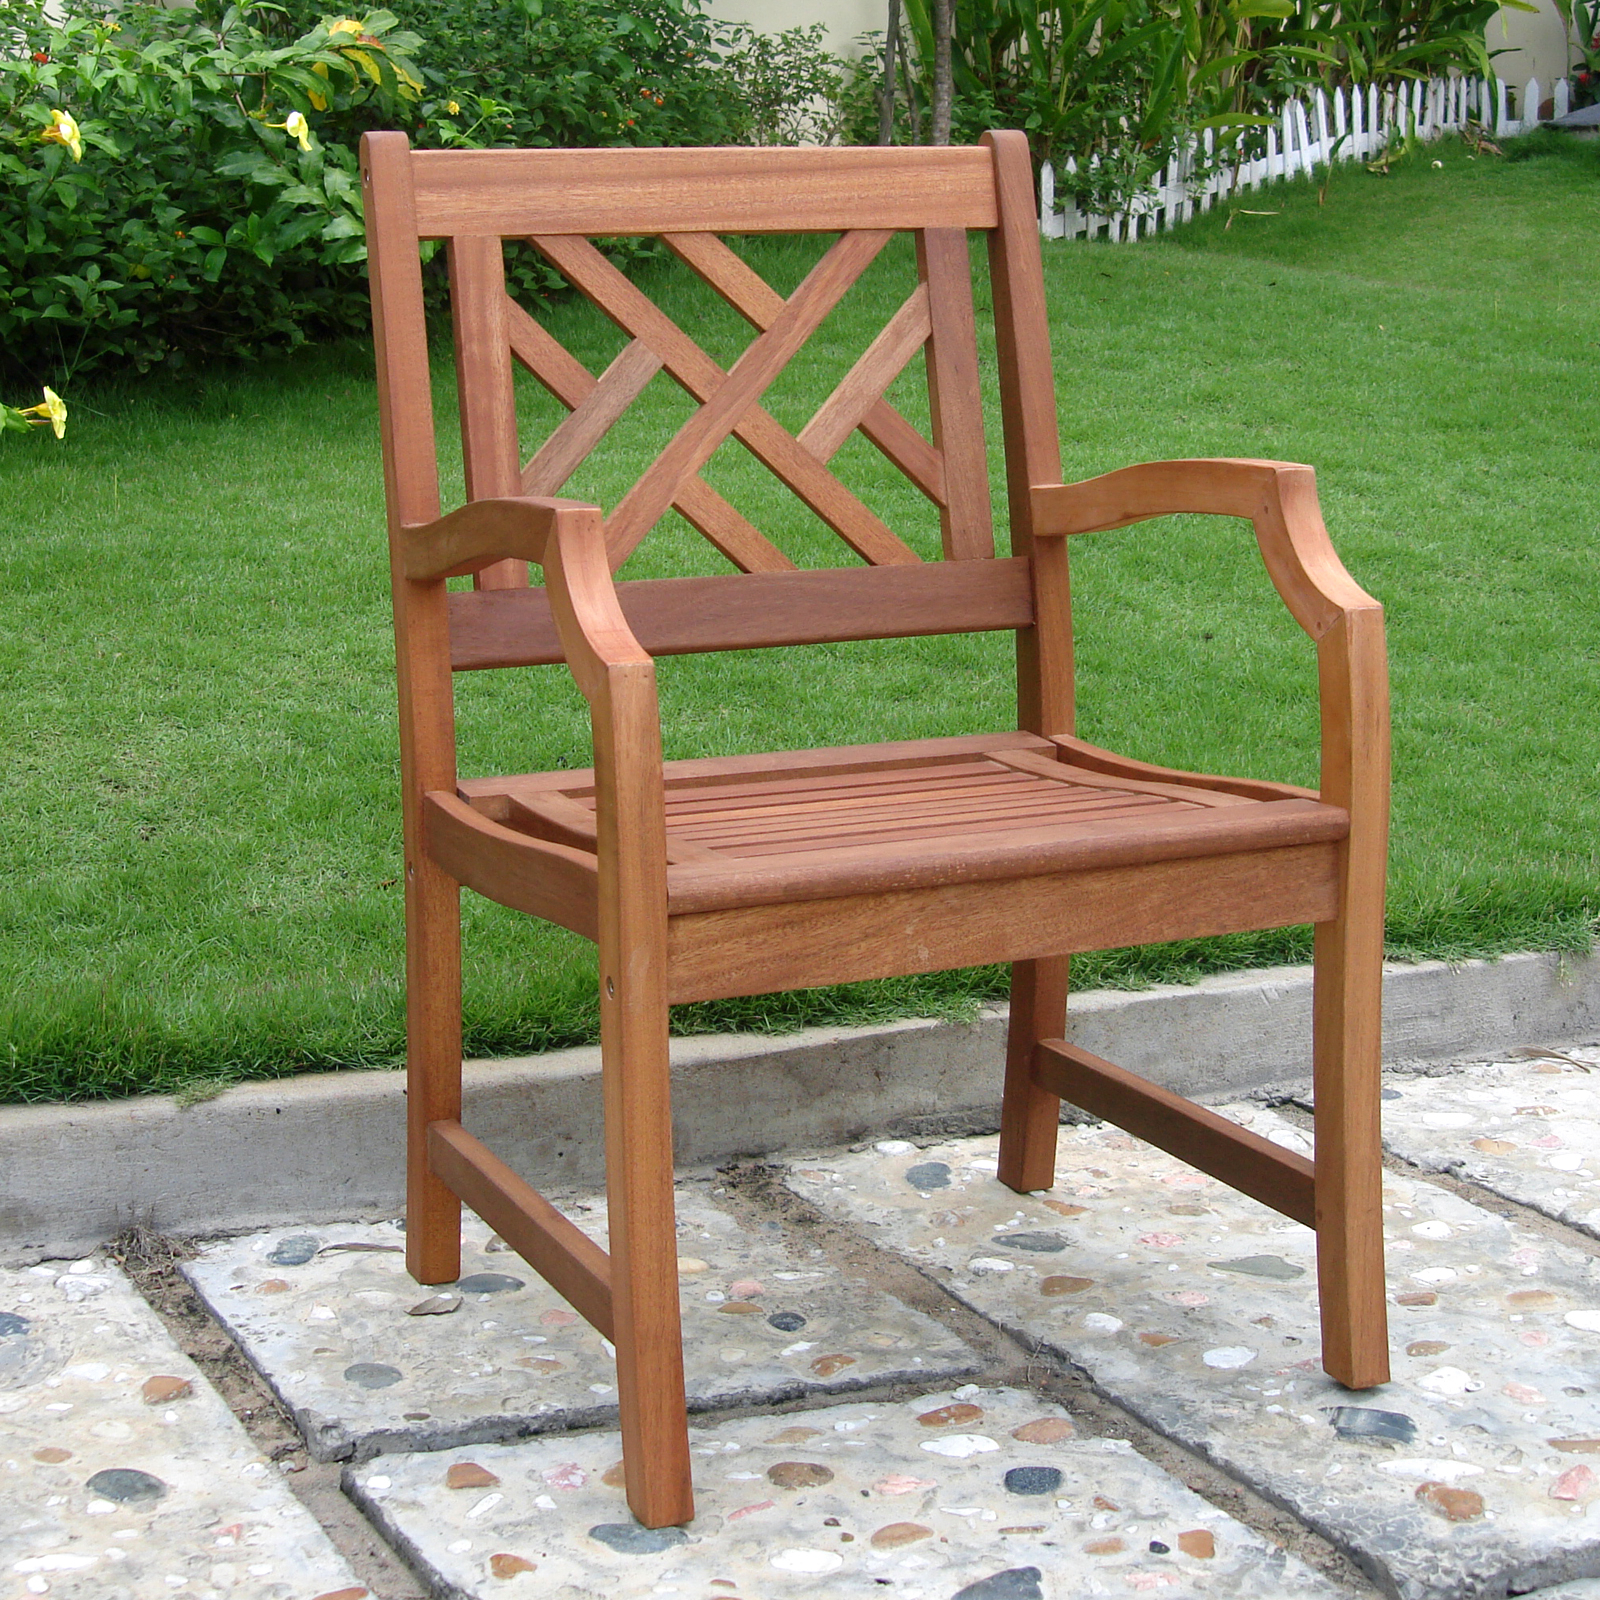 VIFAH Outdoor Wood Arm Chair, Natural Wood Finish